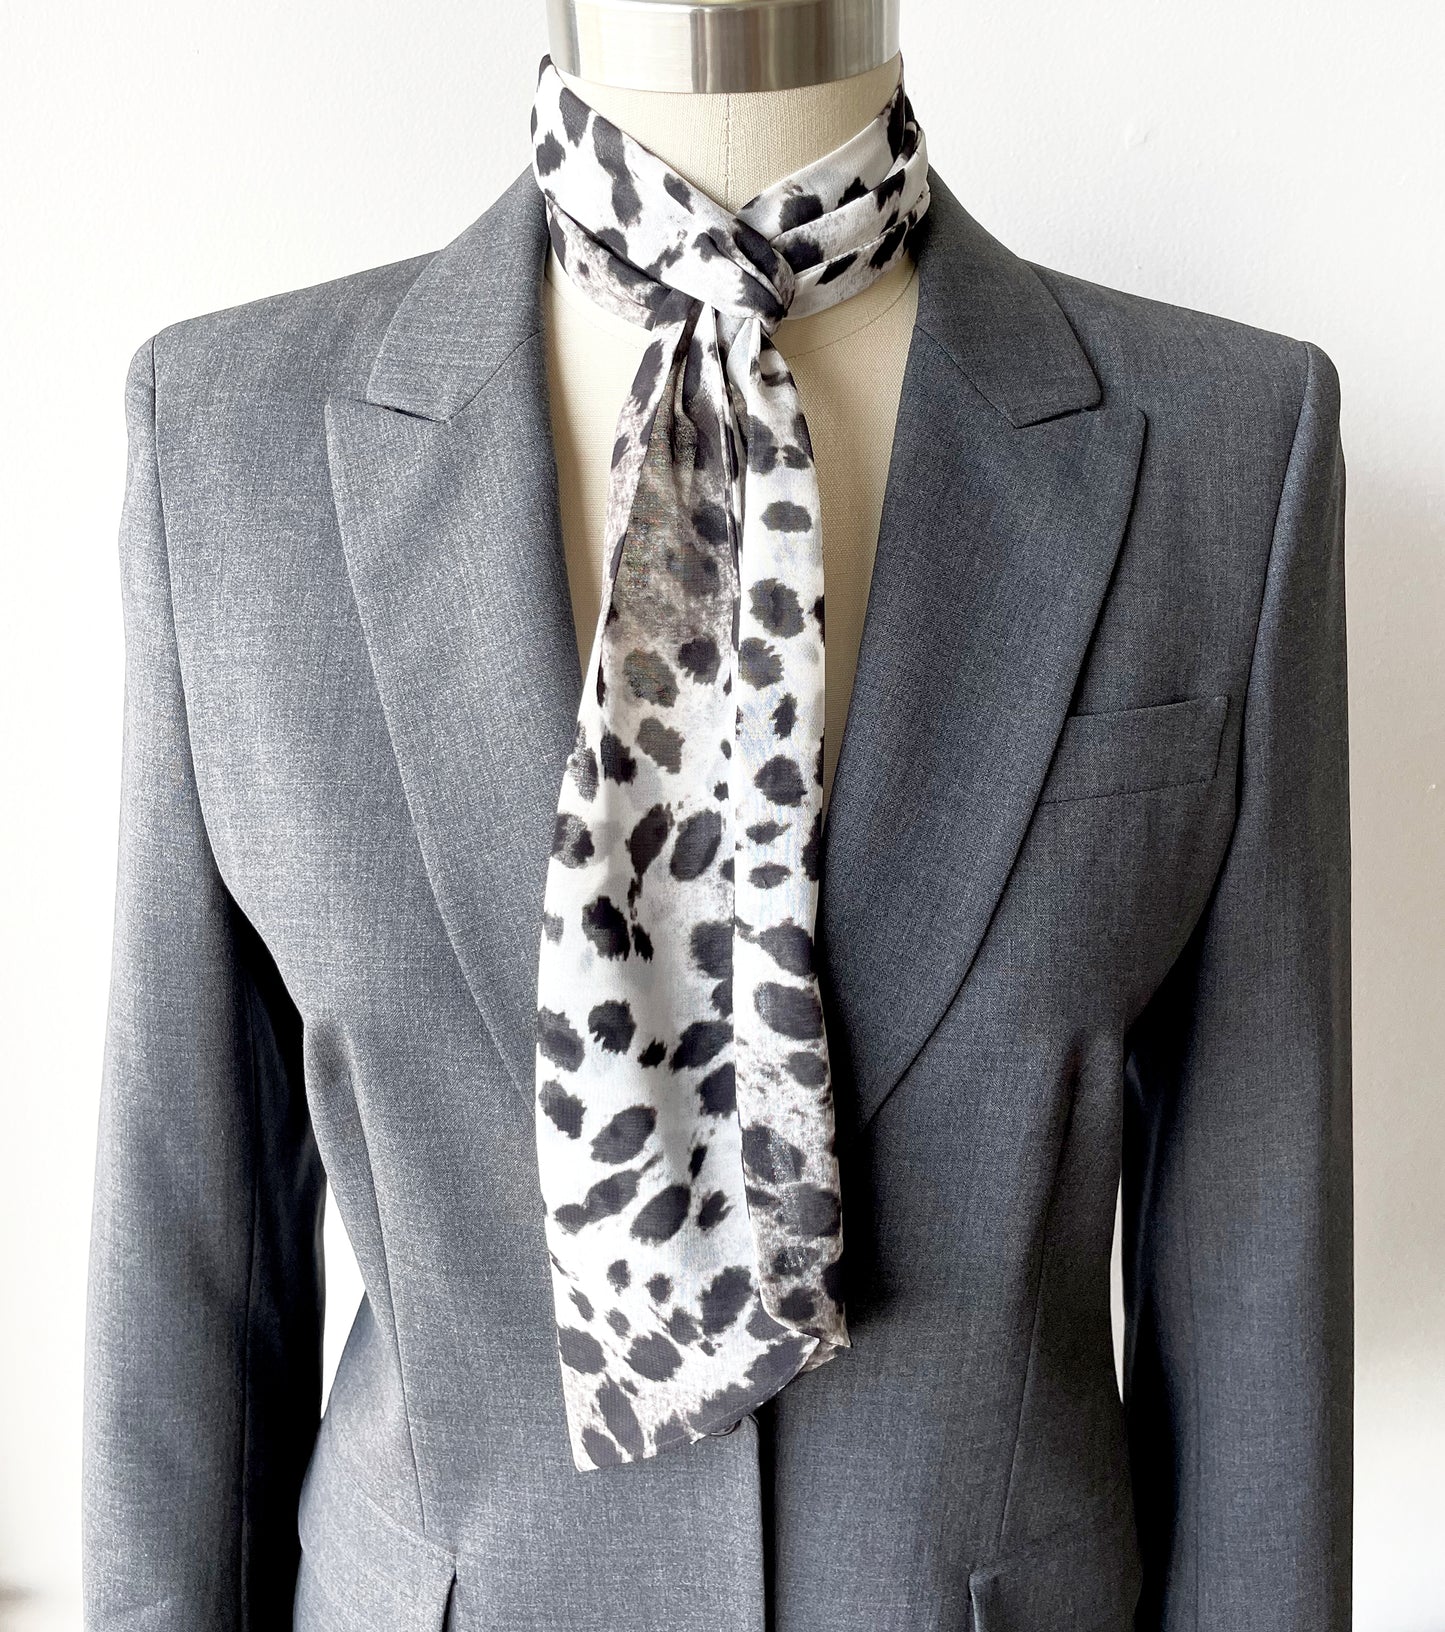 Women's Chiffon Neck Tie with Animal Print Black & White